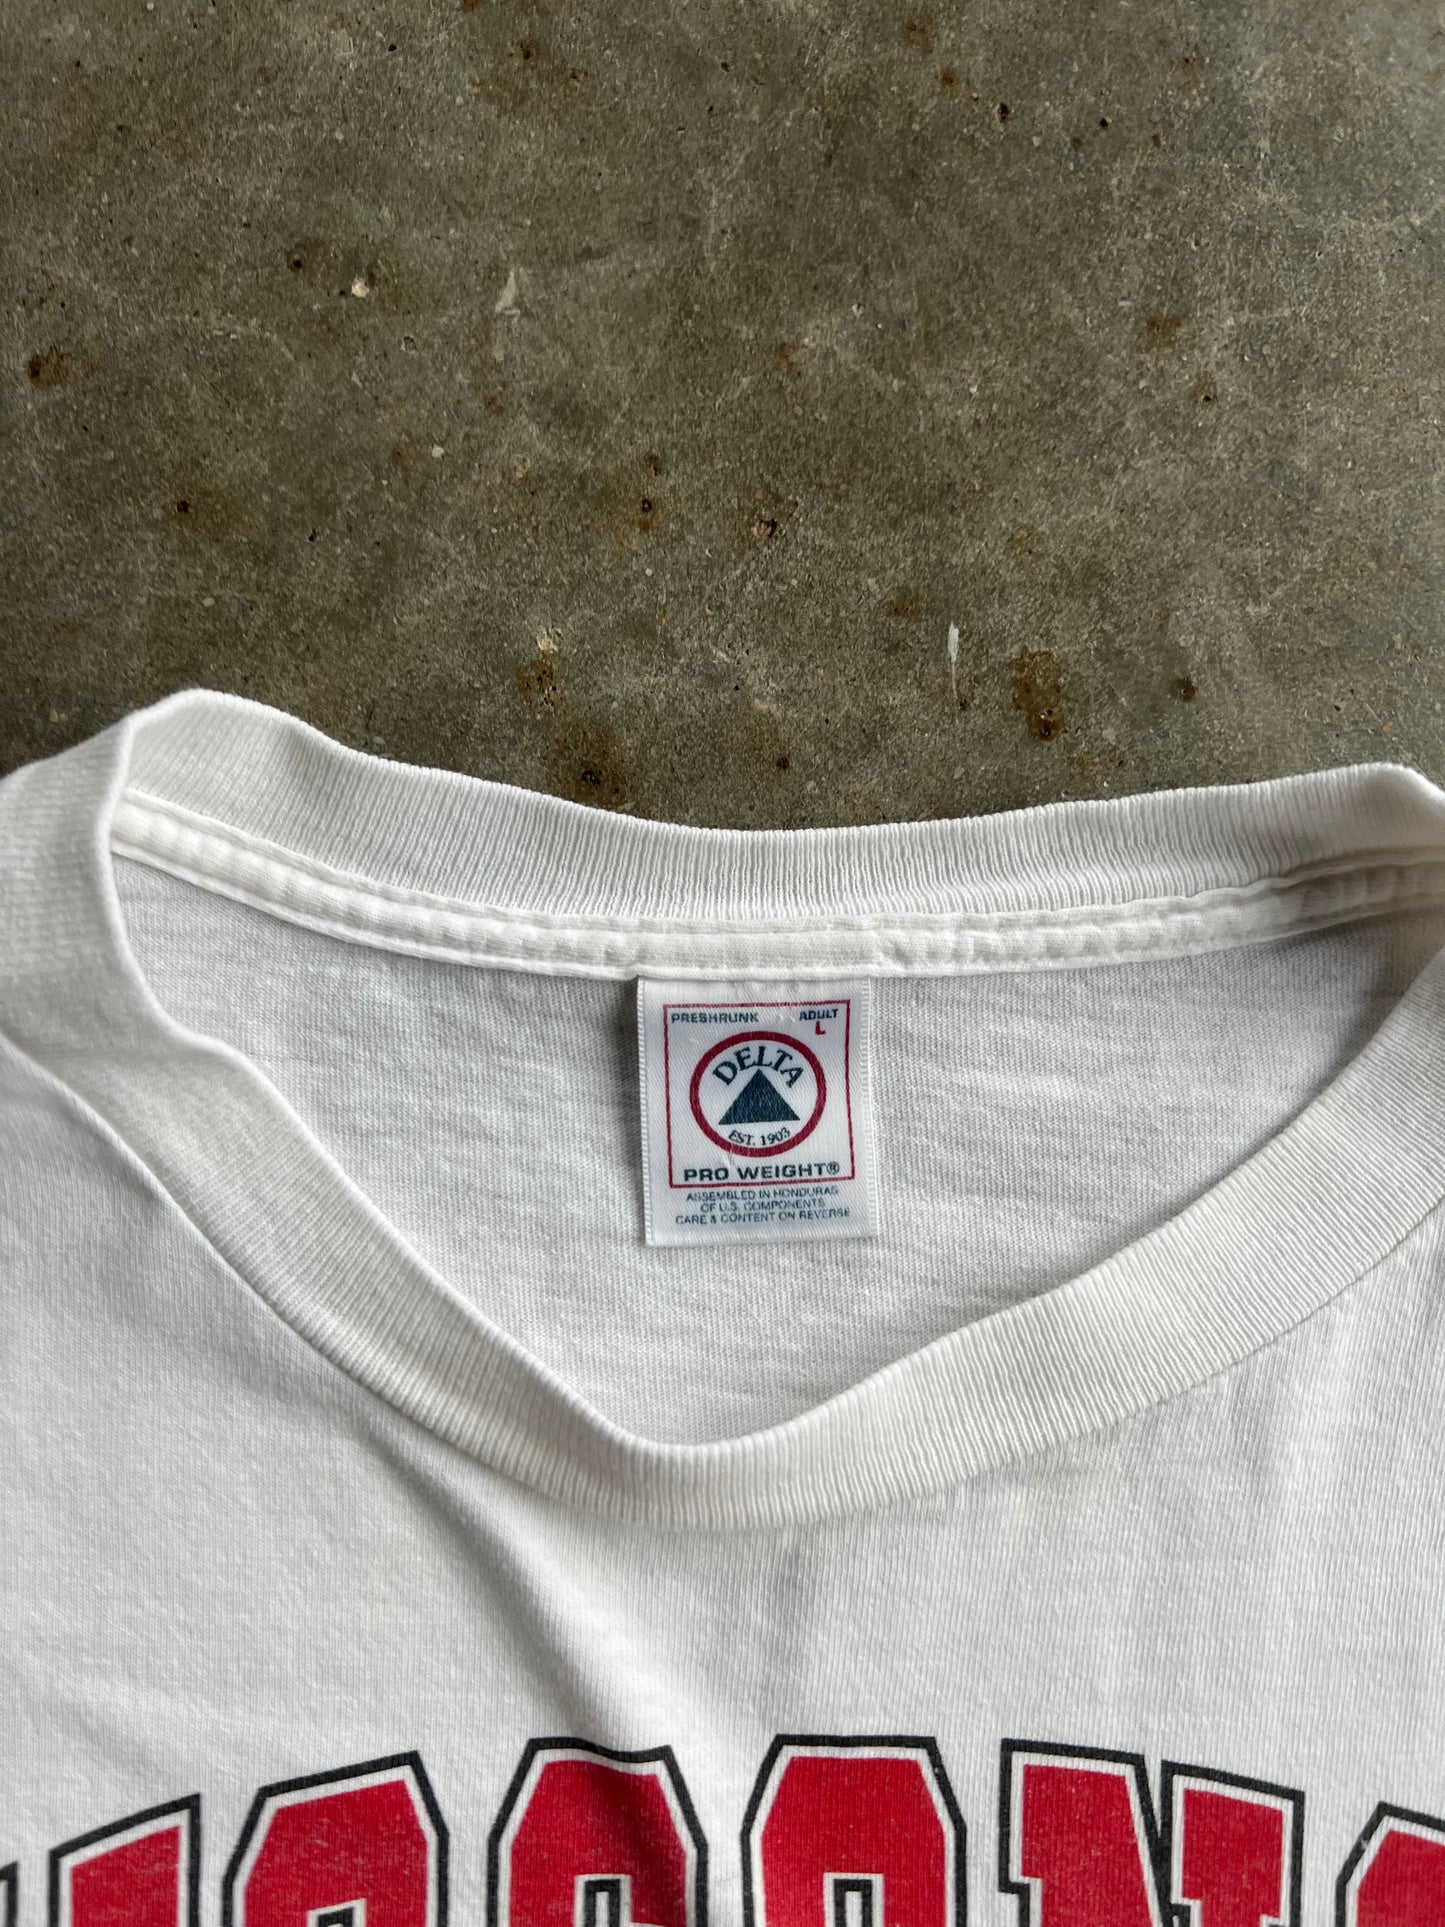 Vintage University of Wisconsin Shirt - L